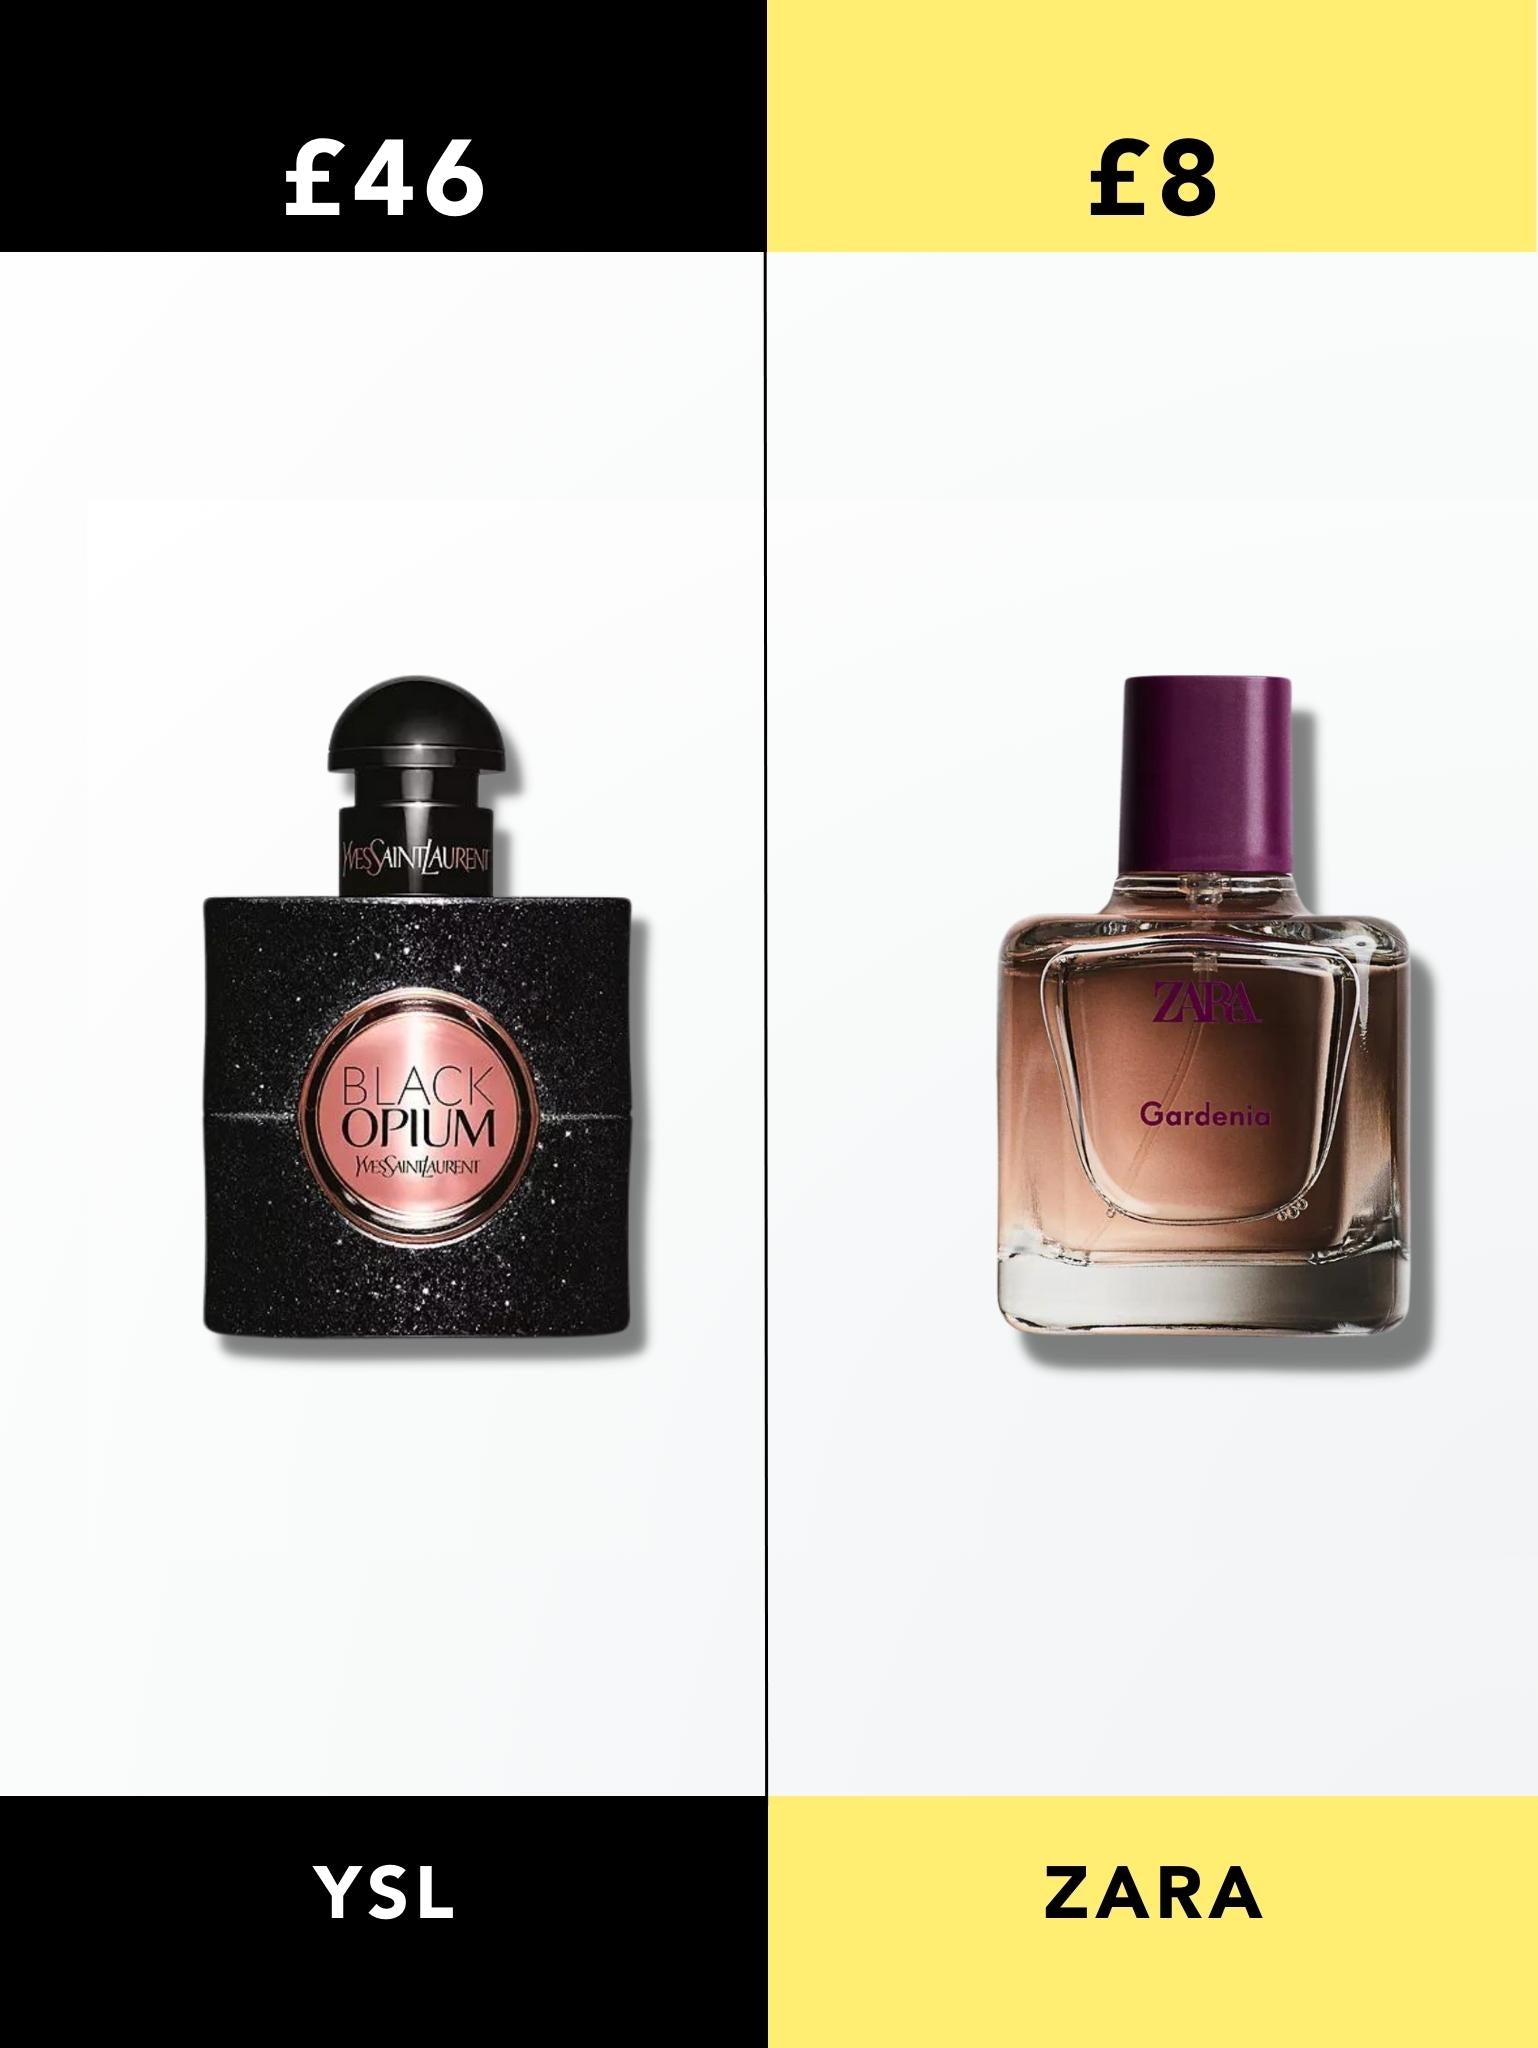 YSL Black Opium vs Zara Gardenia Perfume